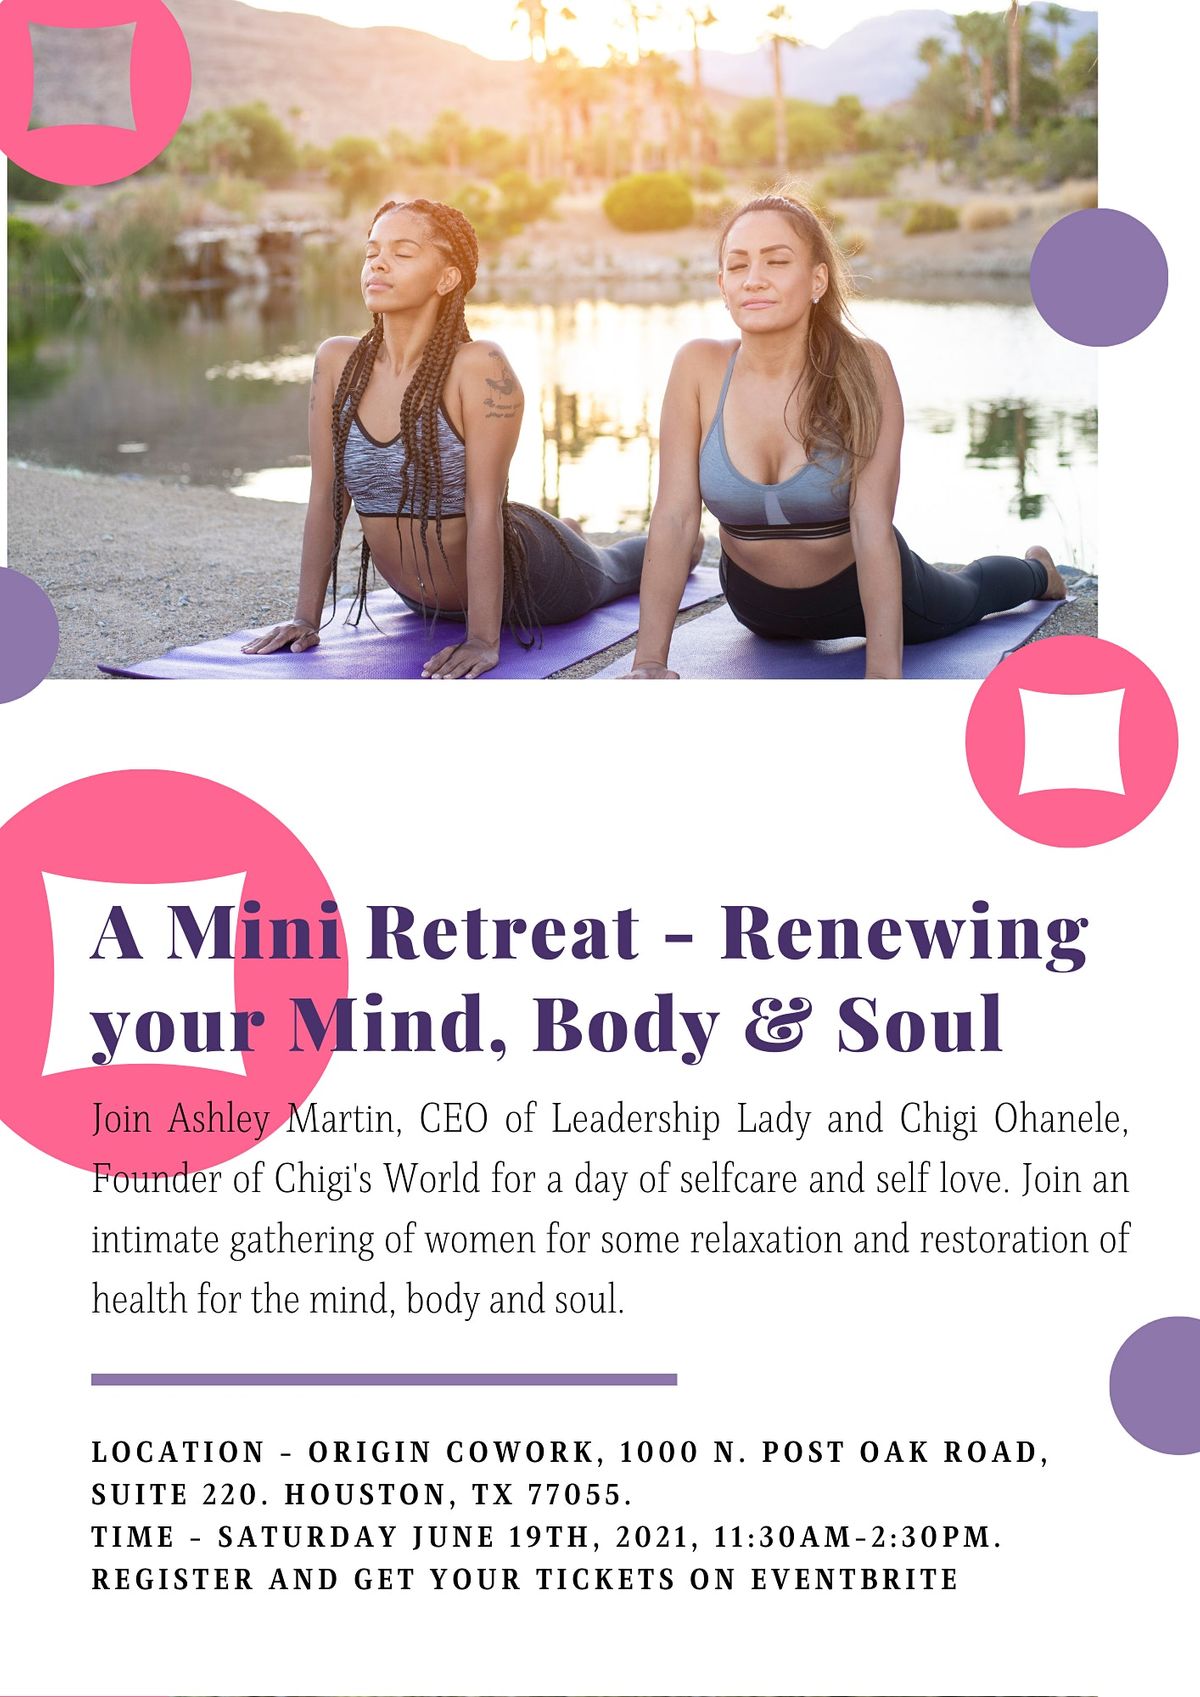 A Mini Retreat - Renewing your Mind, Body & Soul